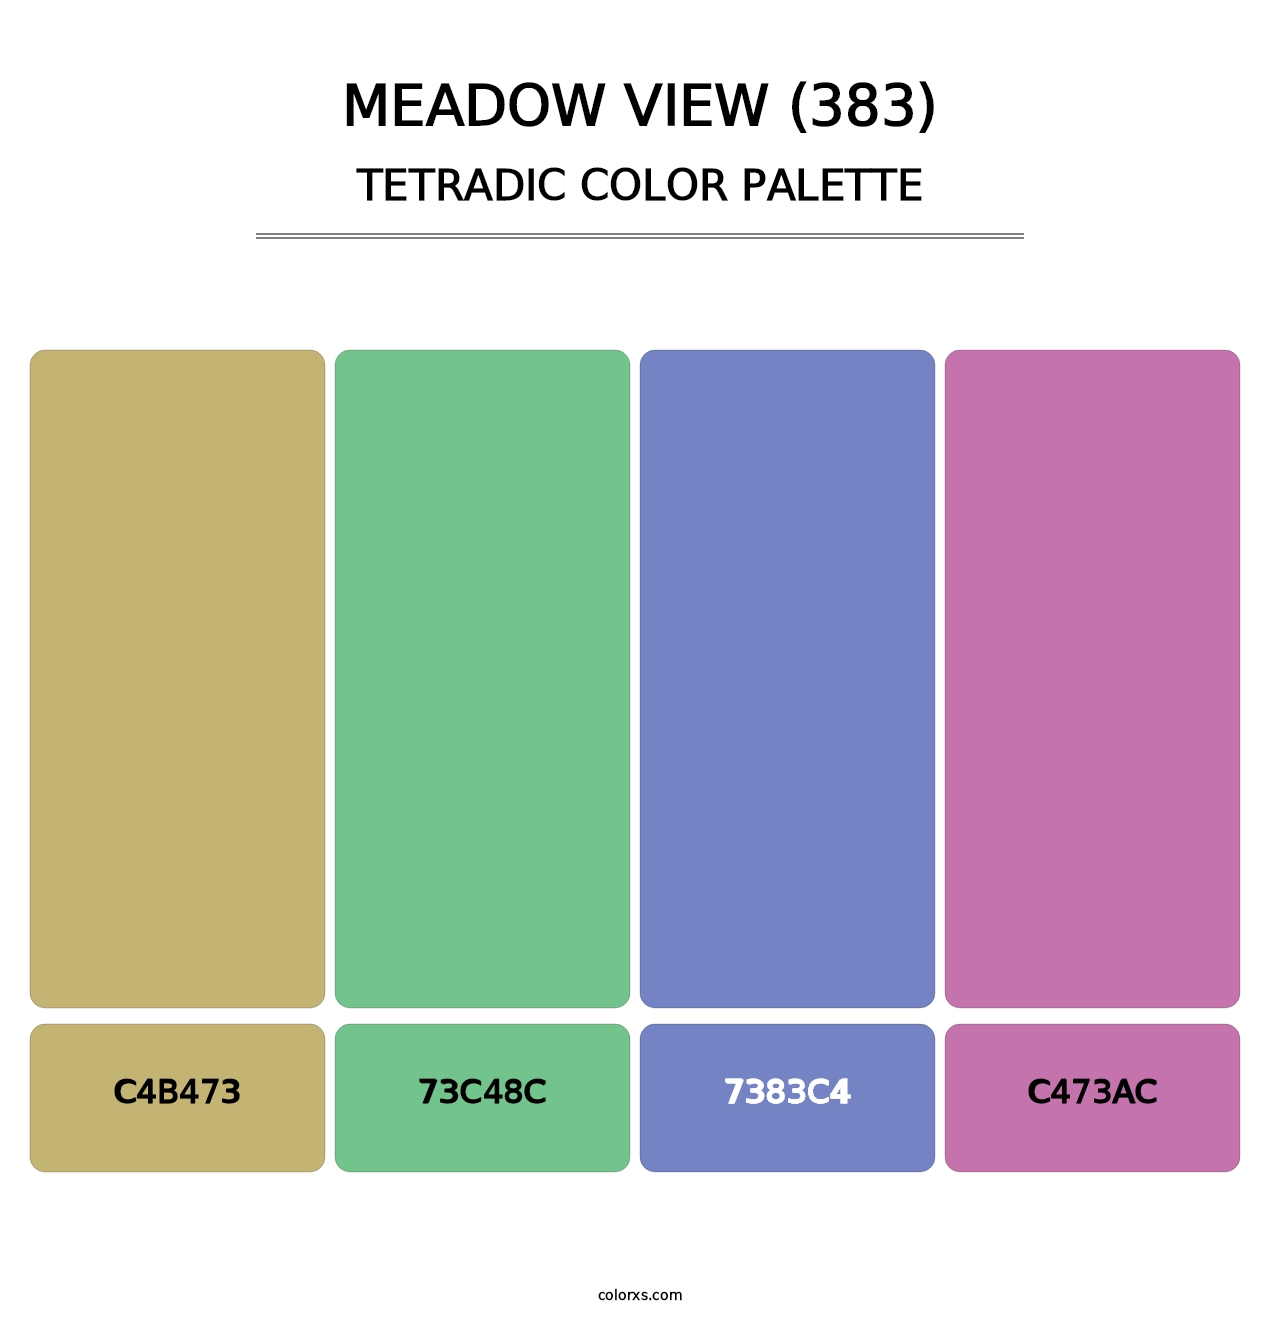 Meadow View (383) - Tetradic Color Palette